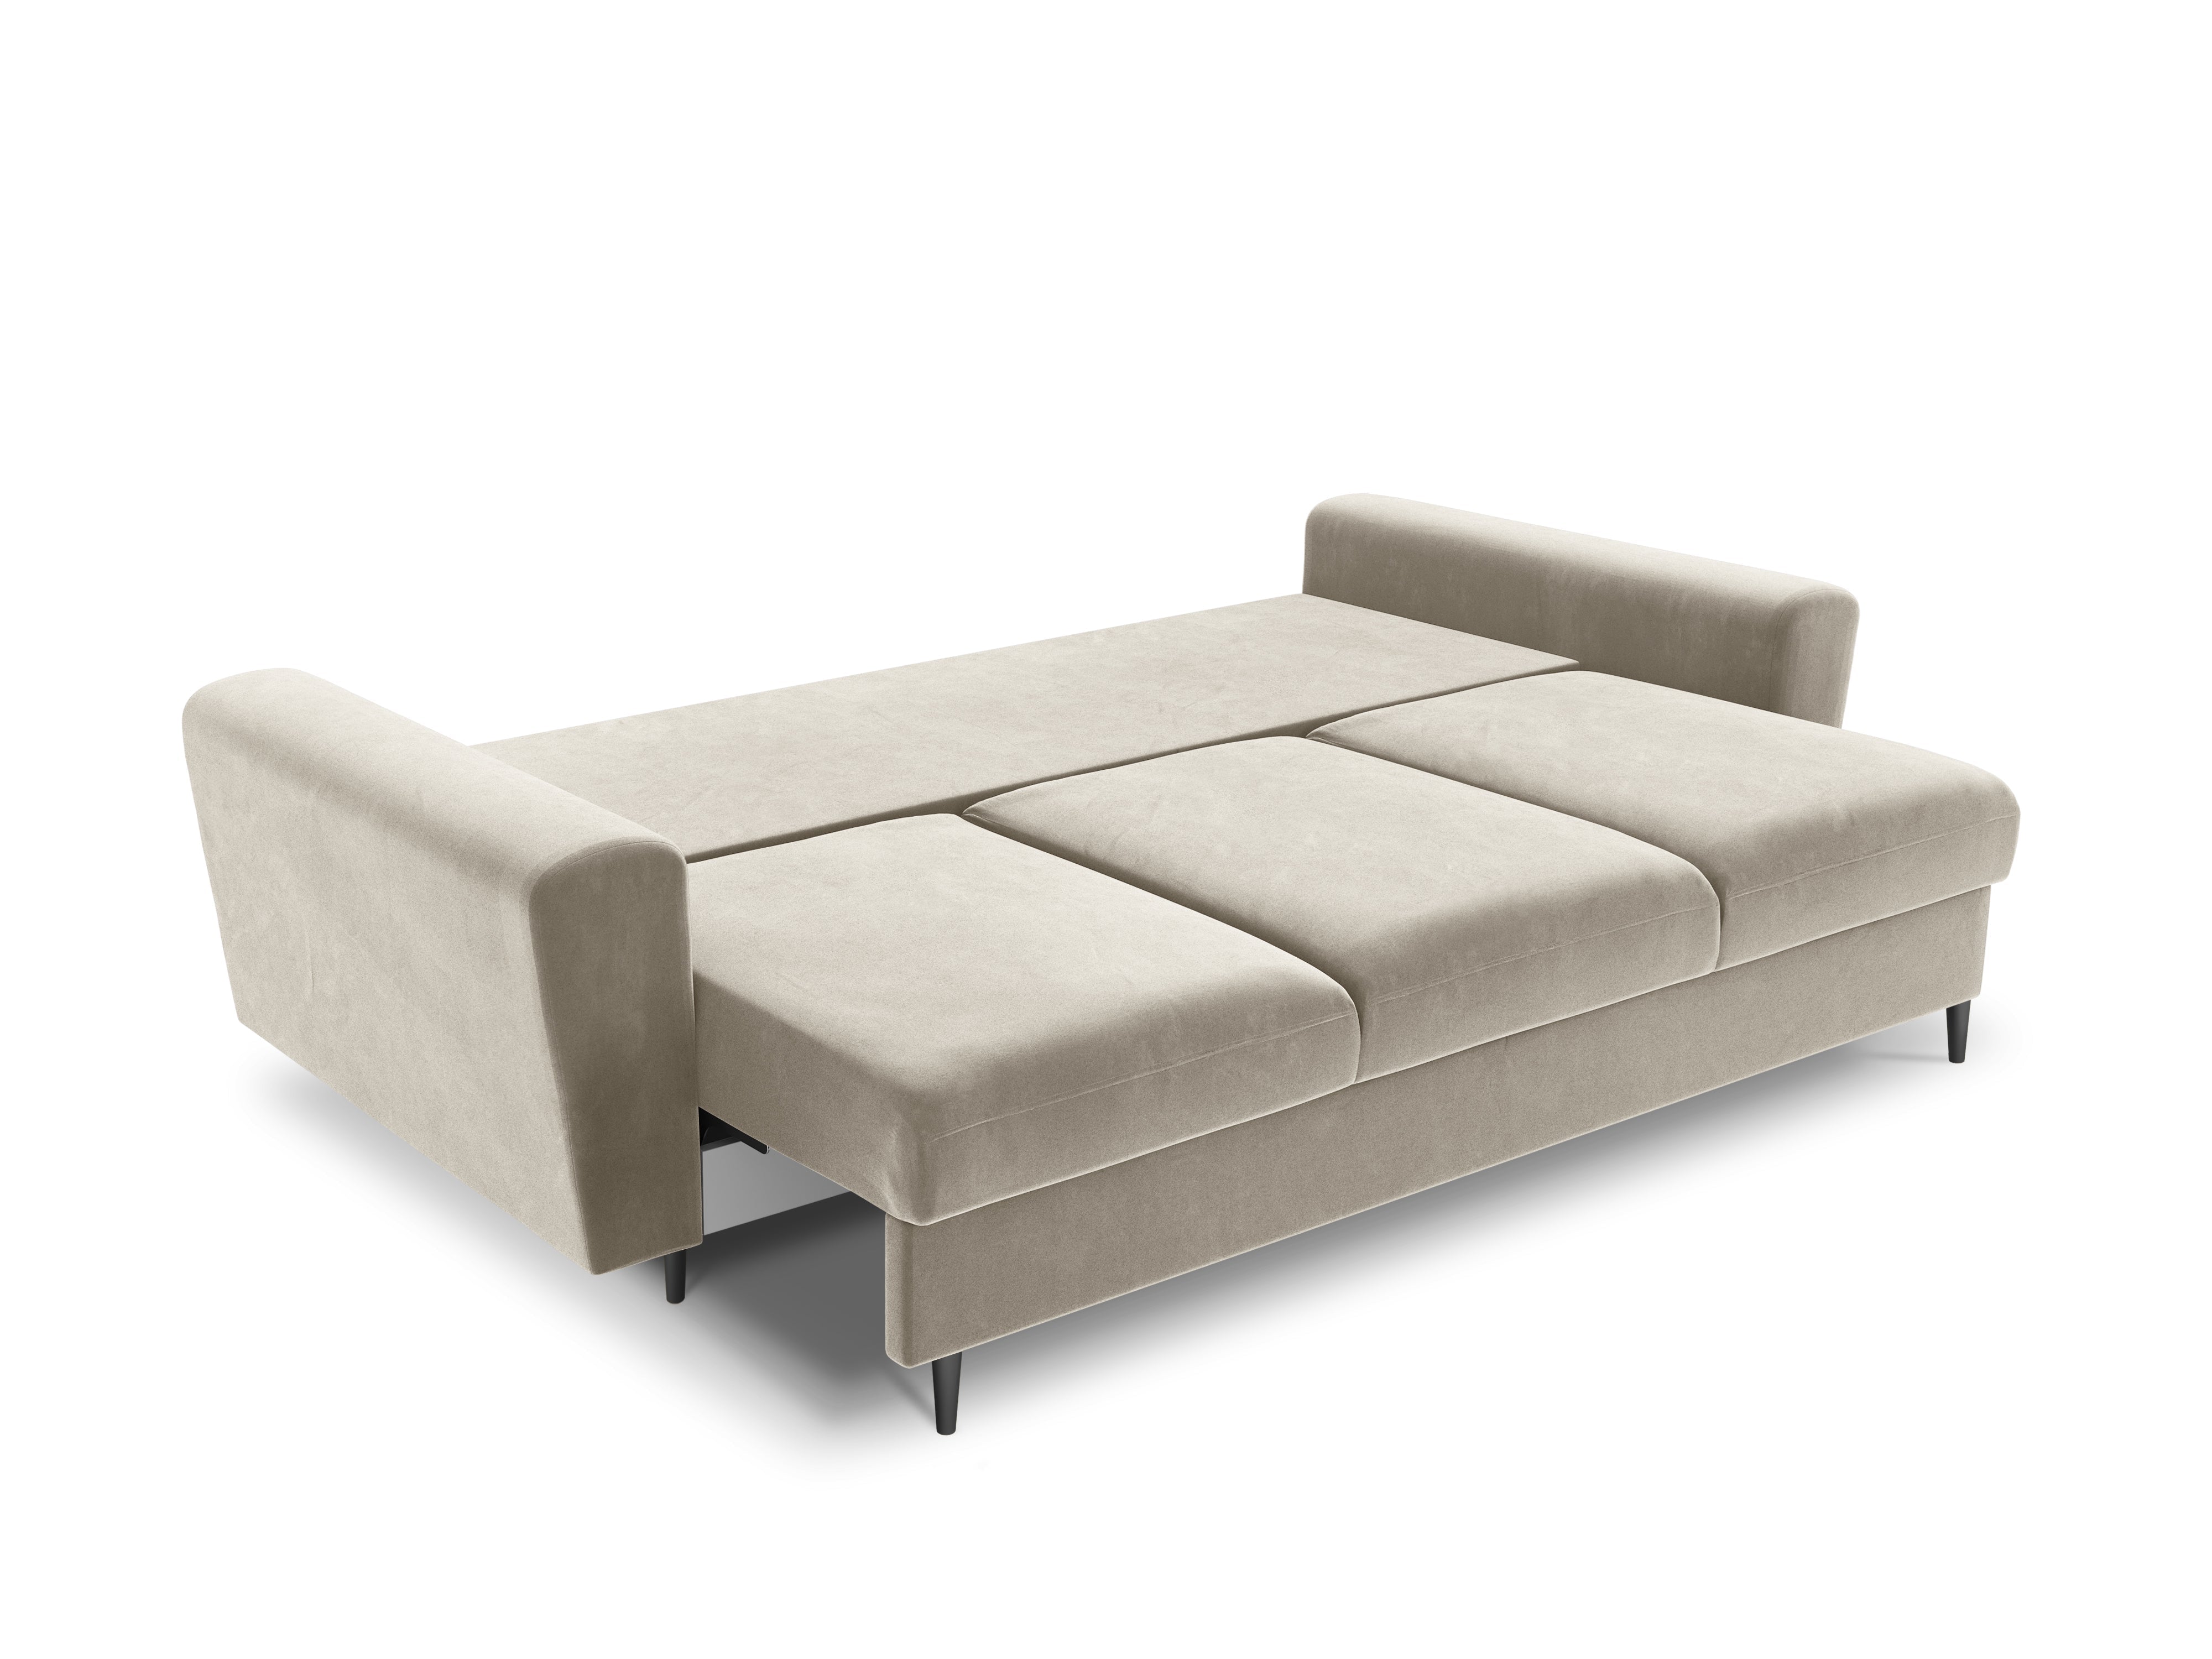 Beige sofa with sleeping function